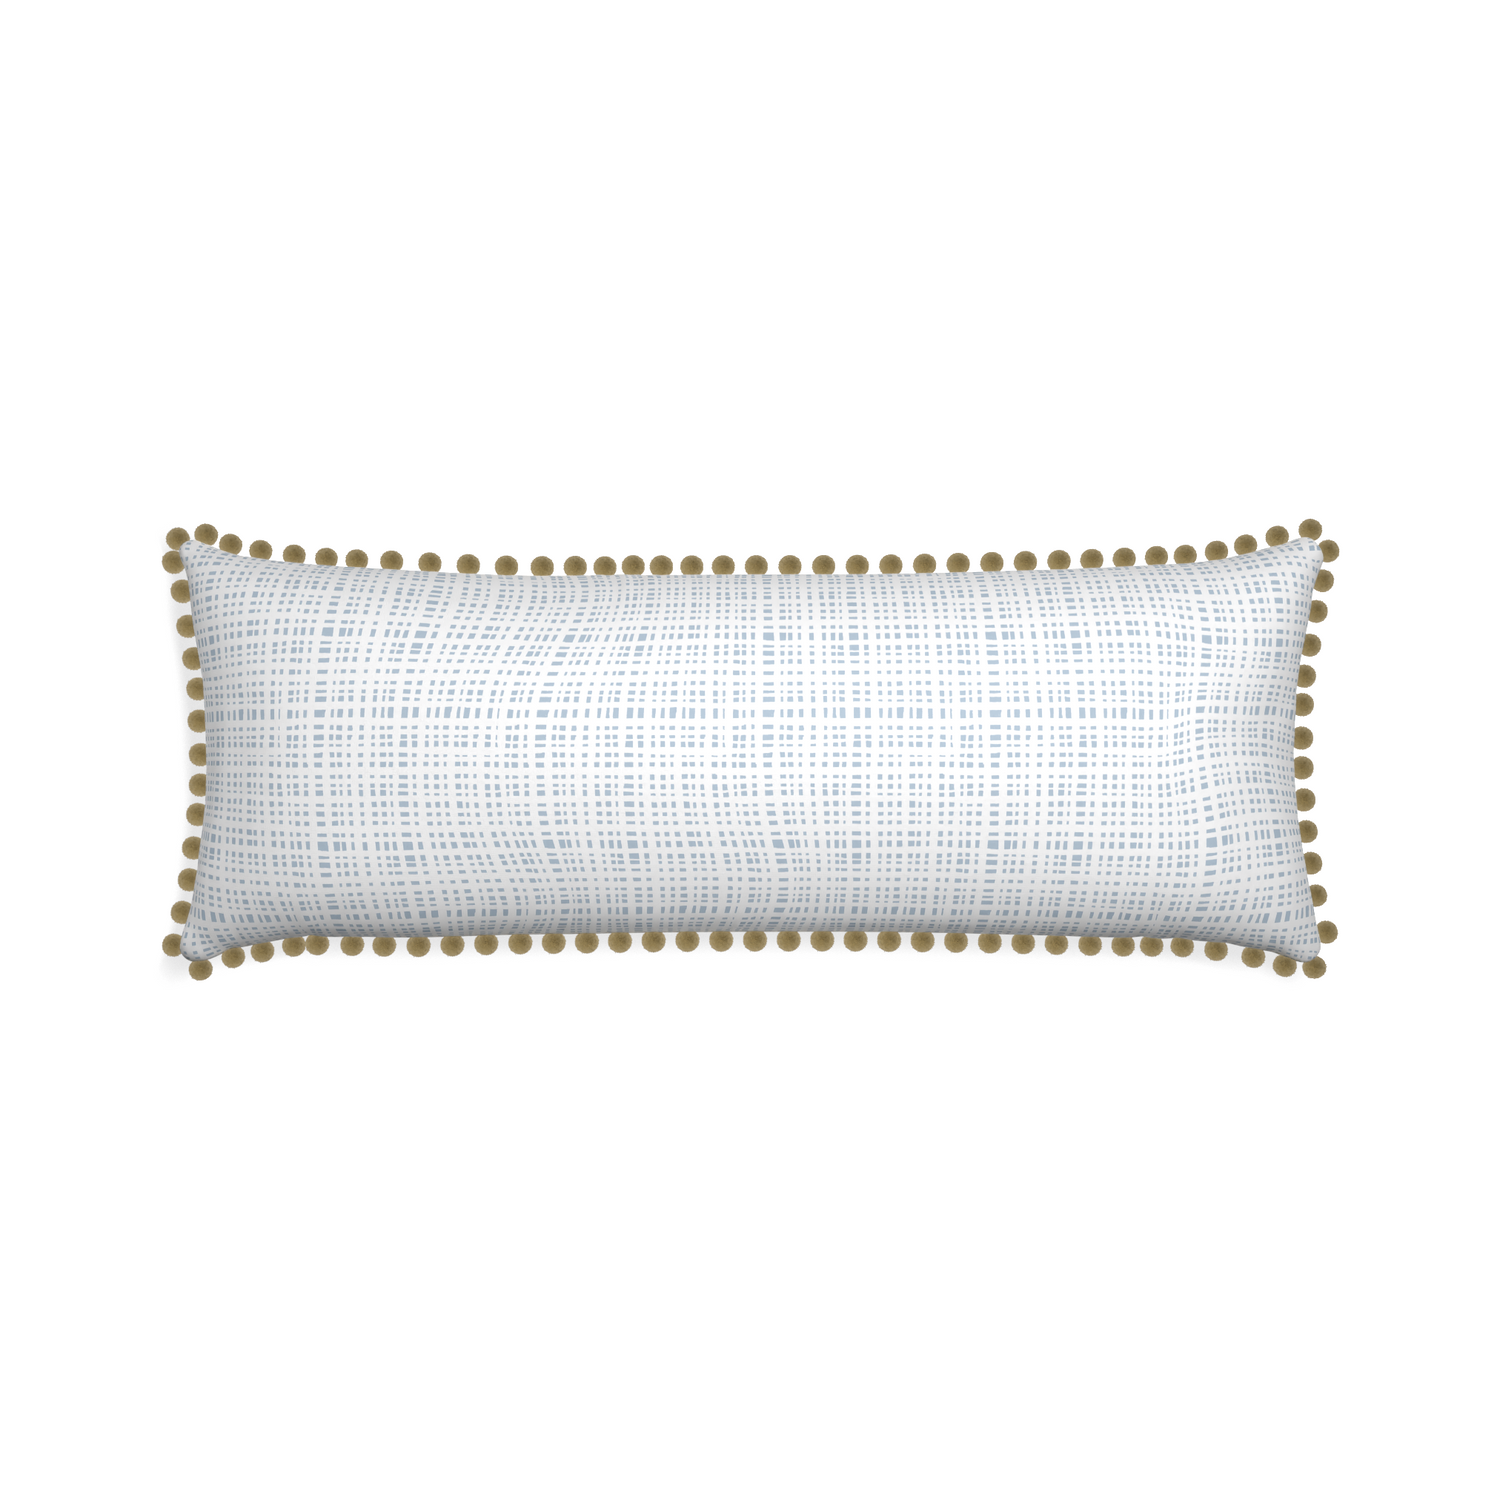 Xl-lumbar ginger sky custom pillow with olive pom pom on white background